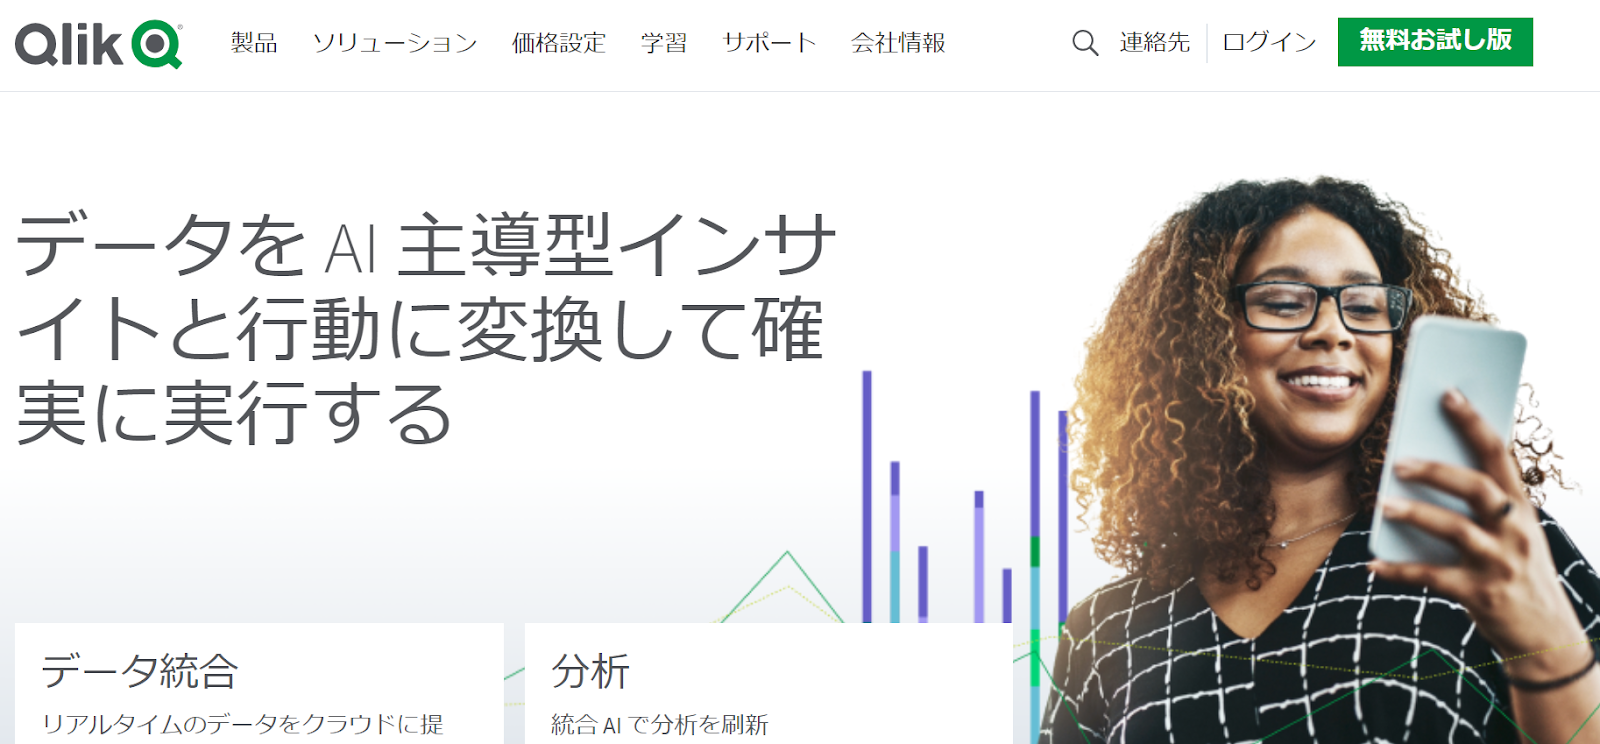 Qlik JapanがQlik Senseに関する無料Webセミナーを開催へ